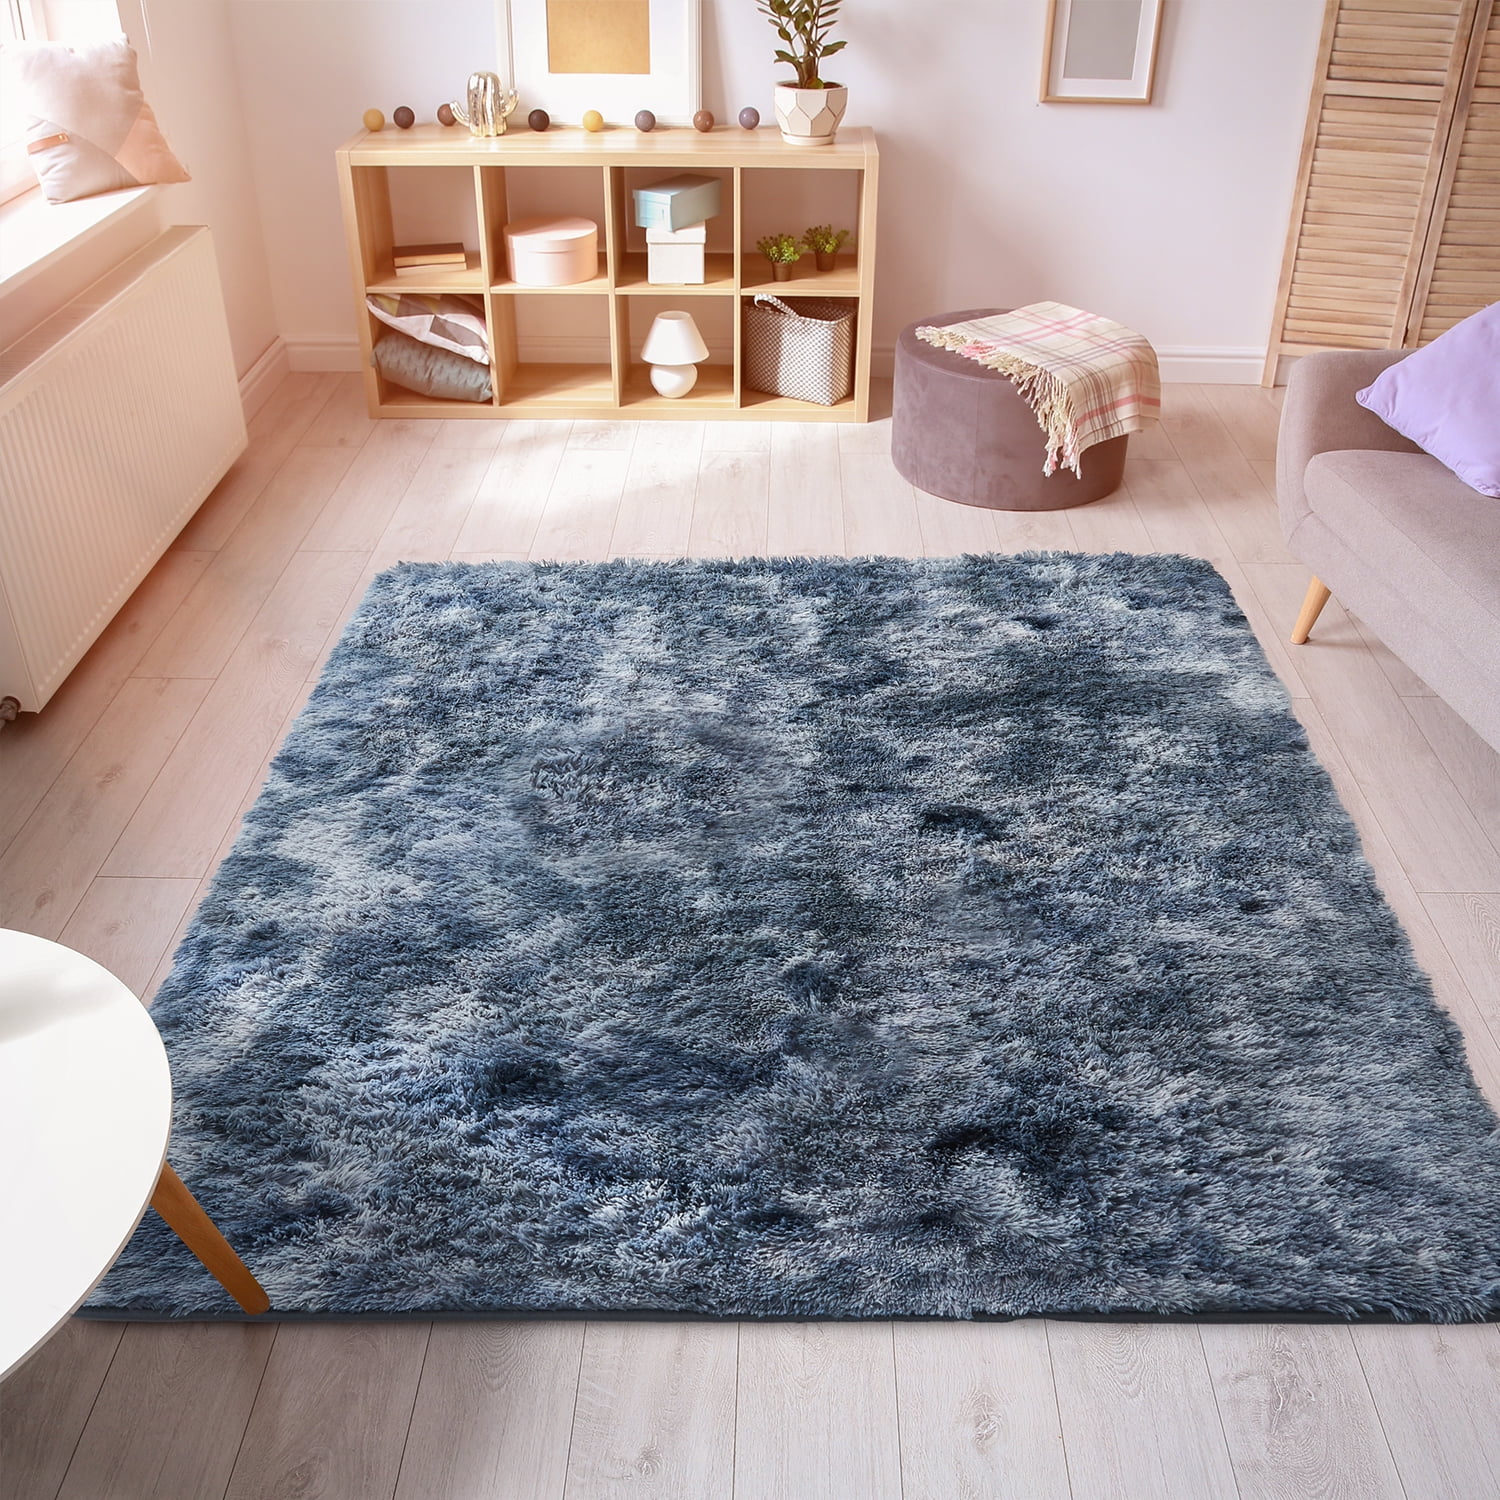 Hot Sale  Area Rug Kids Playing Tatami Carpet Living Room Bedroom Mat 